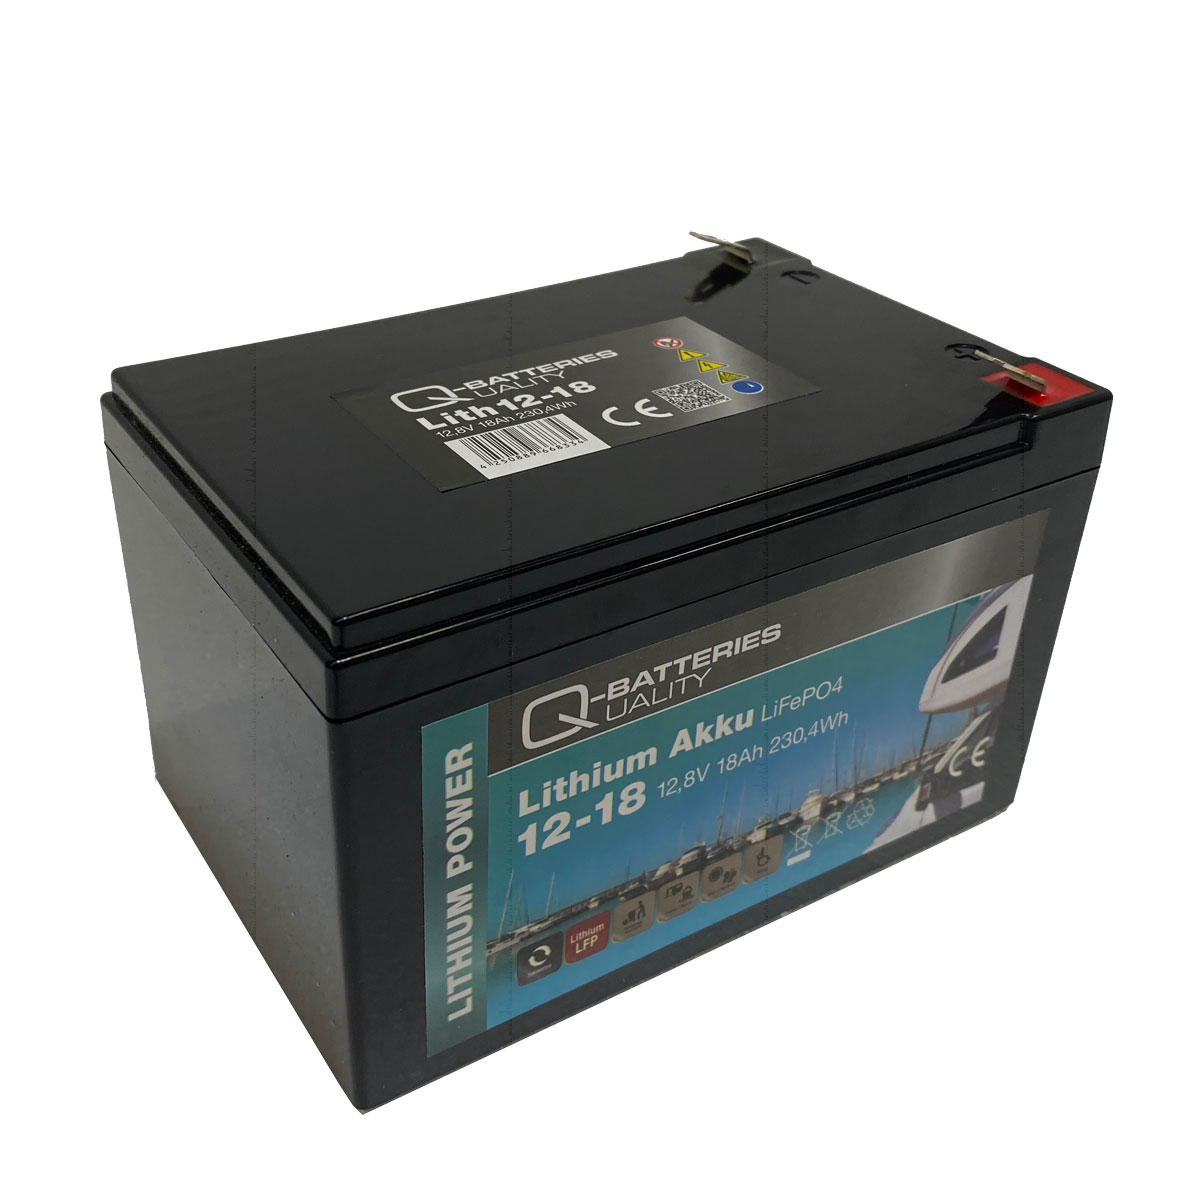 Q-Batteries Lithium Wohnmobilbatterie 12-18 12,8V 18Ah 230,4Wh LiFePO4 Akku